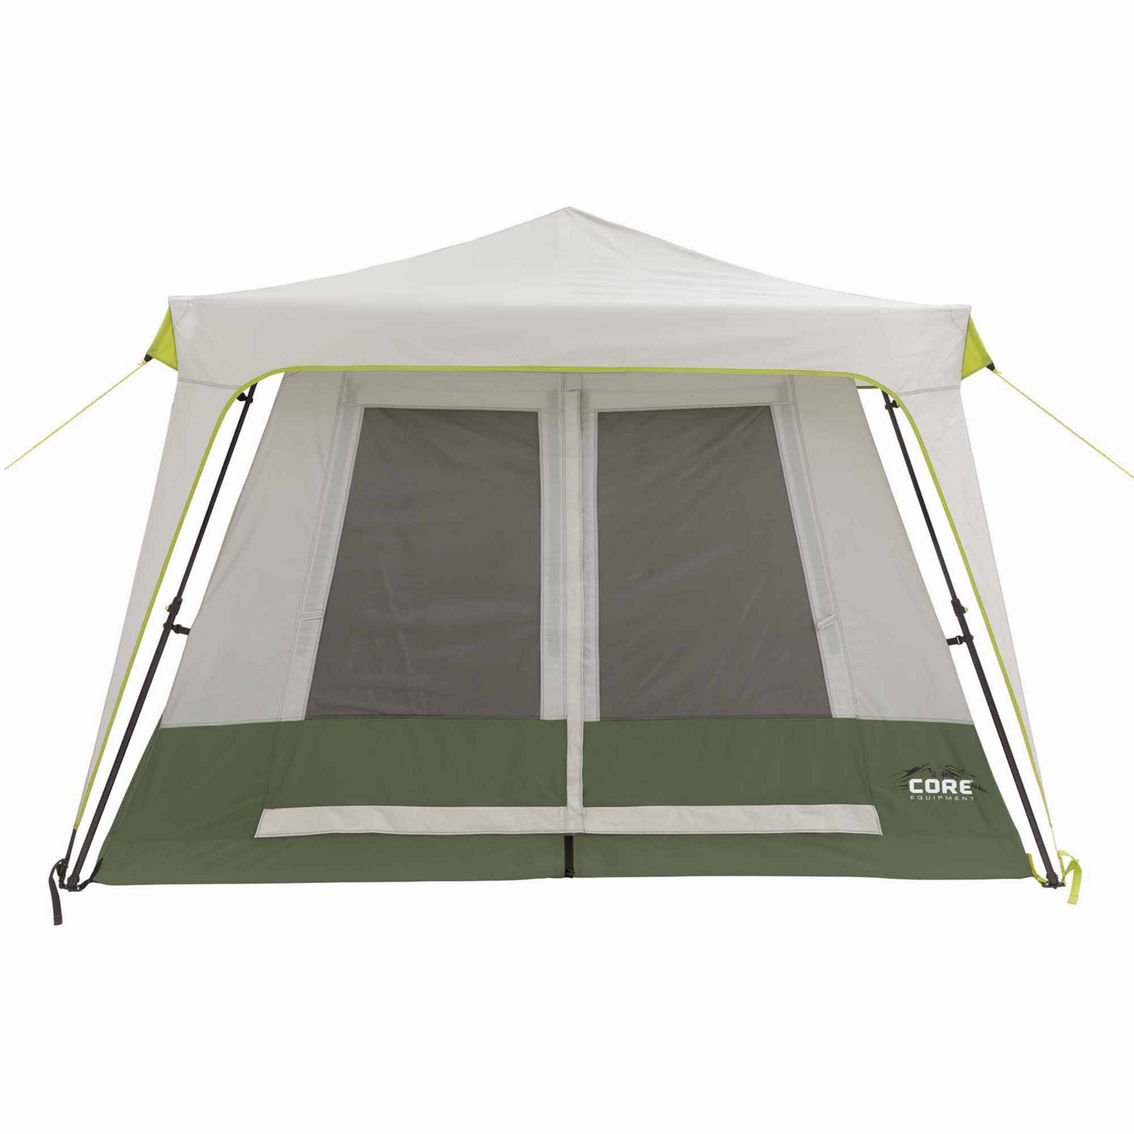 Core Equipment 8 Person Cabin Tent - Image 2 of 6